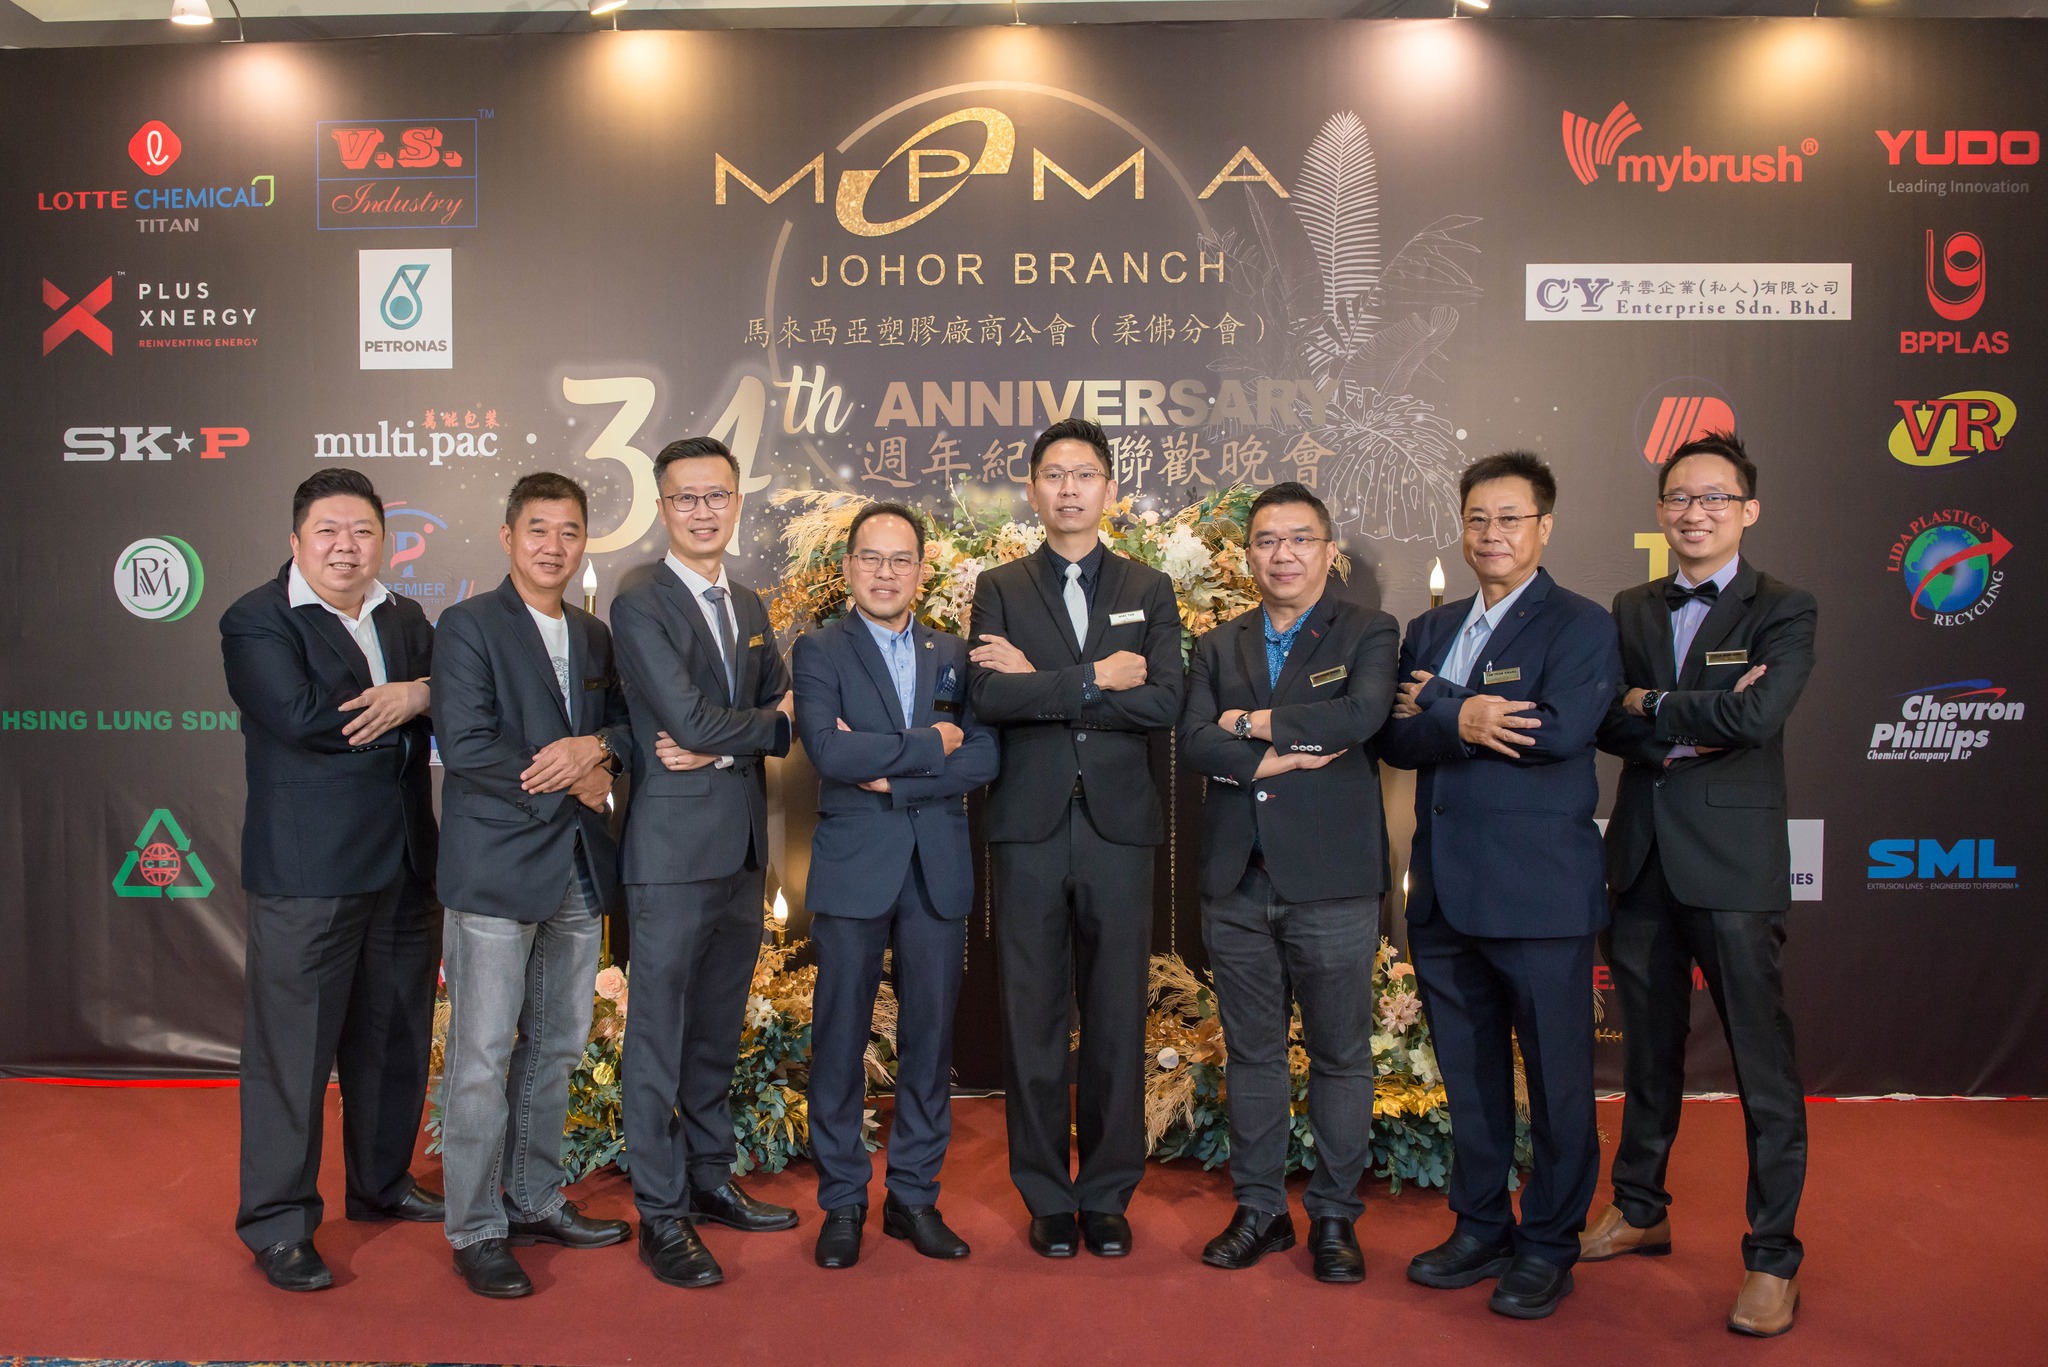 MPMA Johor Branch - 34th Anniversary Celebration